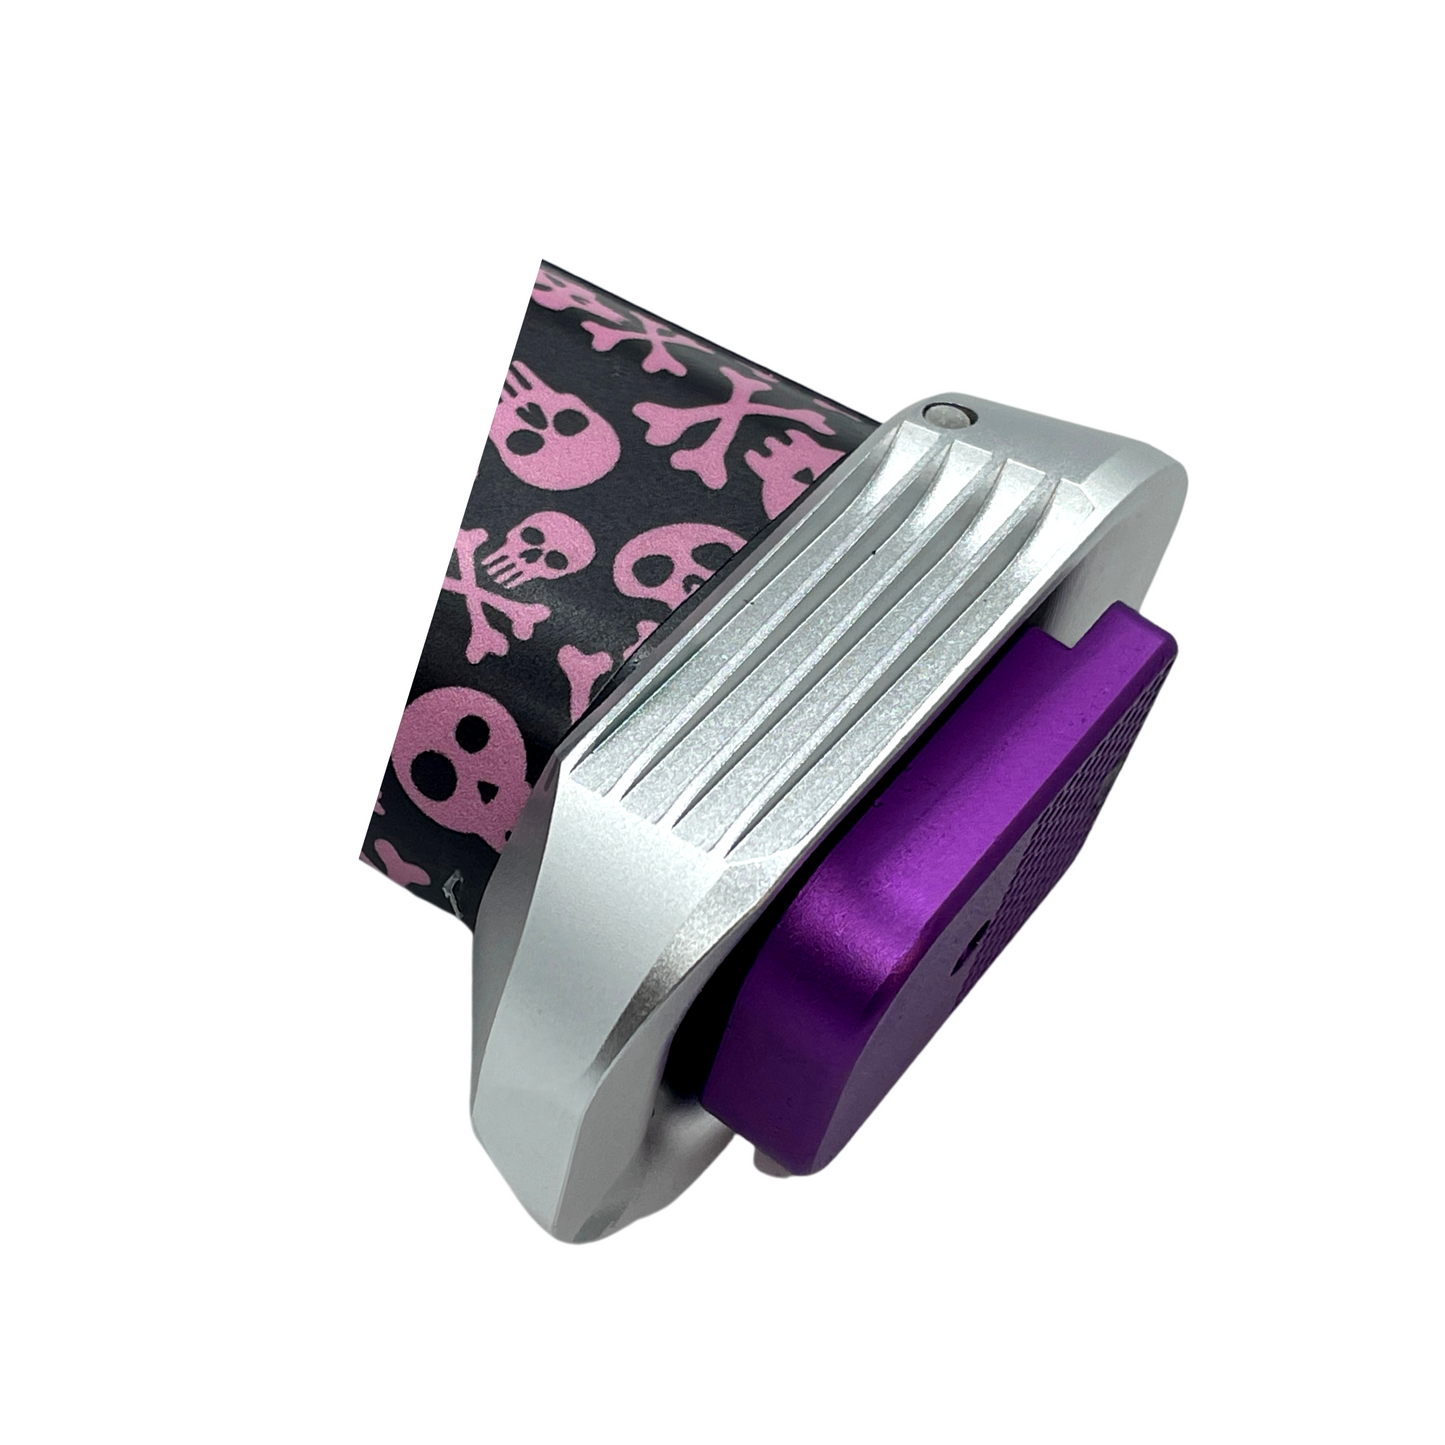 "Pink Bones" Custom GBU 5.1 Hi-Capa Pistol - Gel Blaster